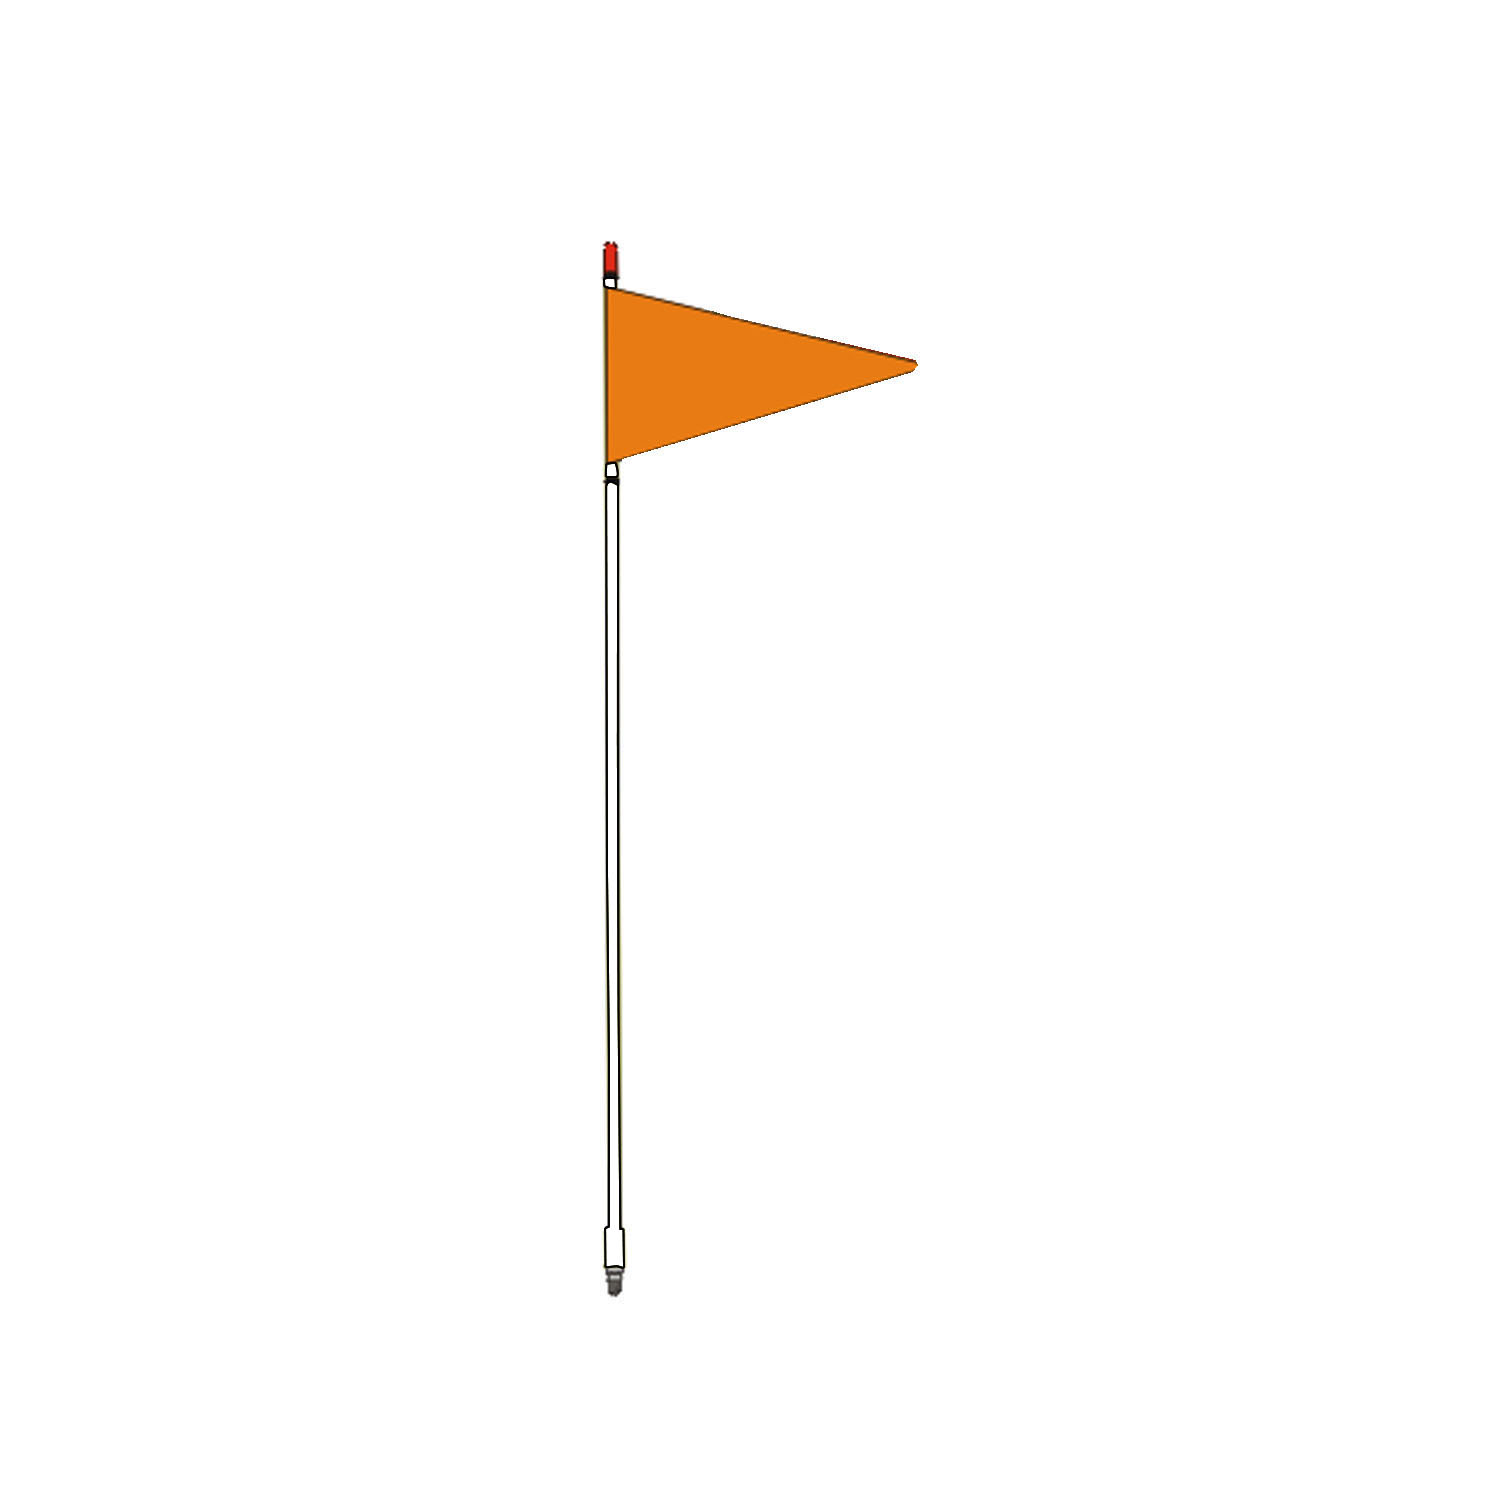 FIRESTIK - F4-W 4 FOOT WHITE FLAGSTICK WITH ORANGE TRIANGULAR SAFETY FLAG - STANDARD 3/8"-24 BASE THREADS